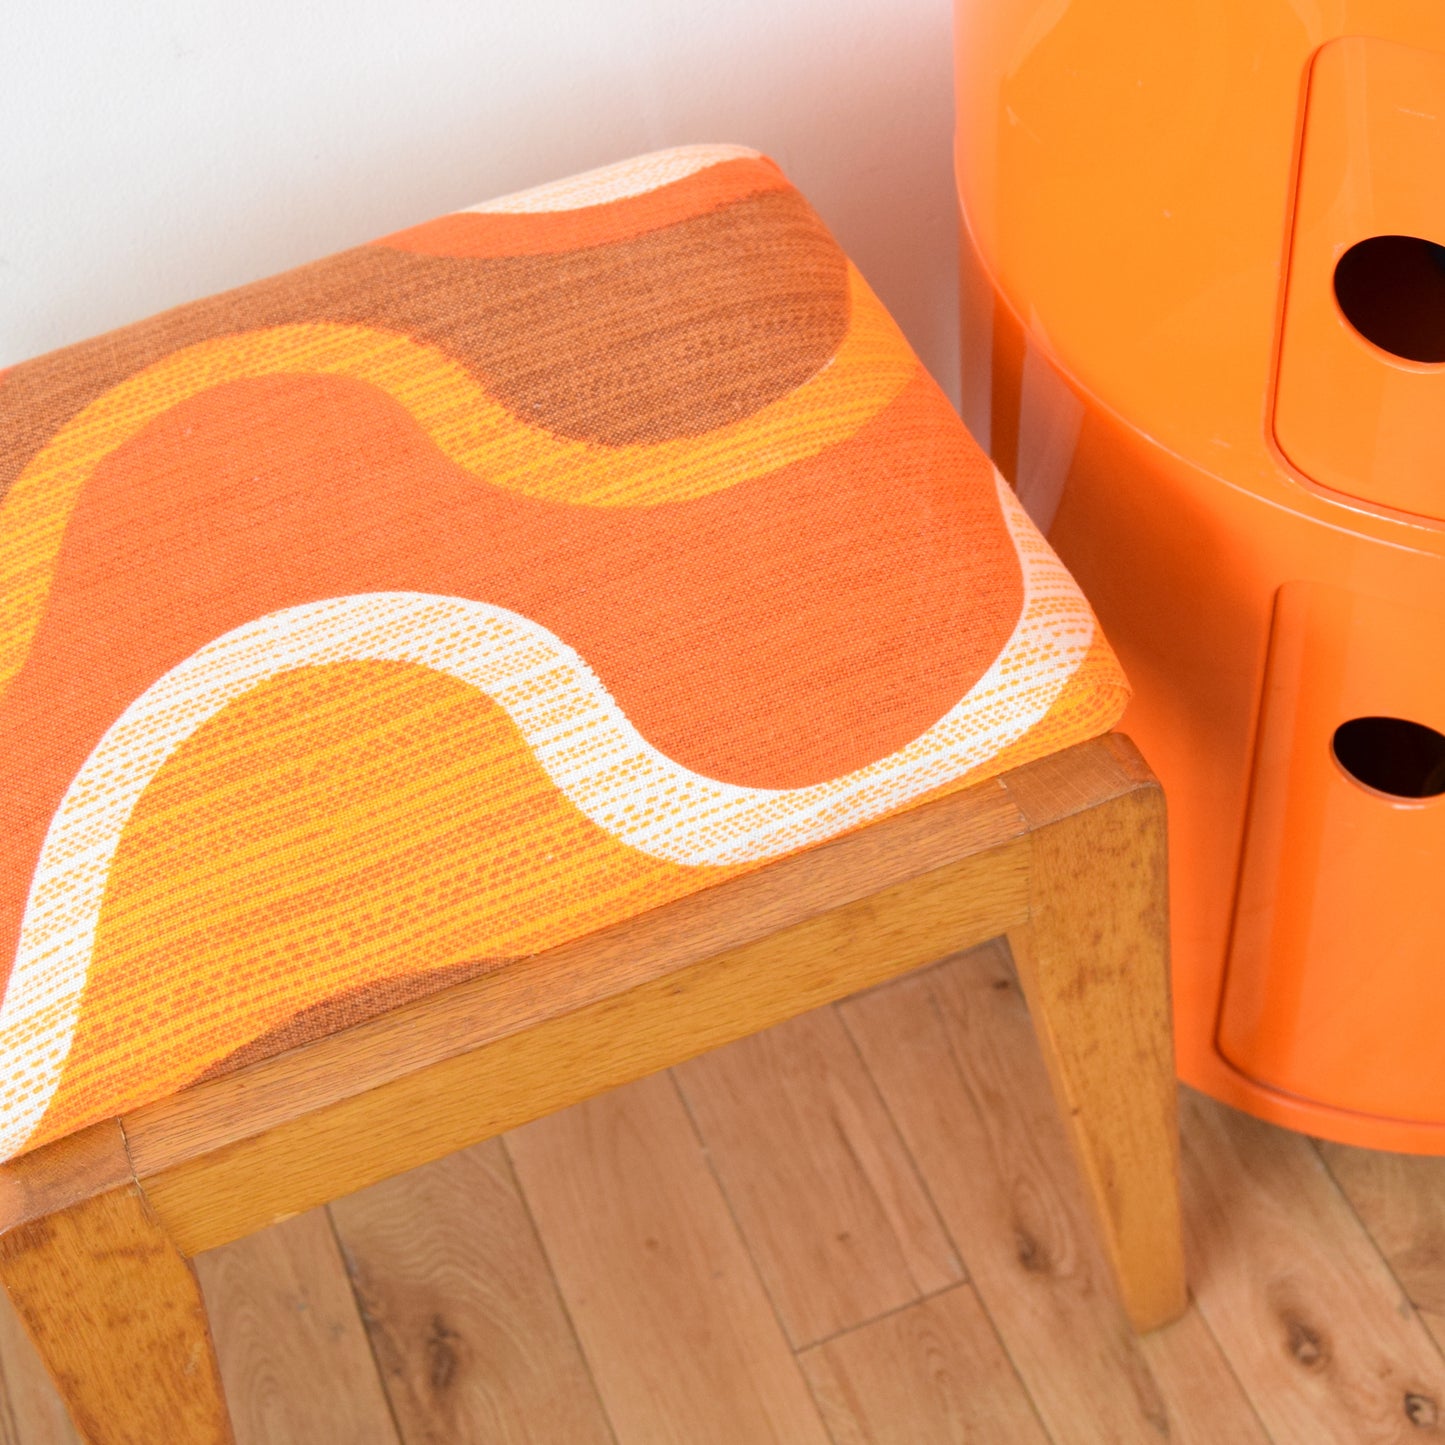 Vintage 1960s Wooden Stool - Orange Swirl Fabric